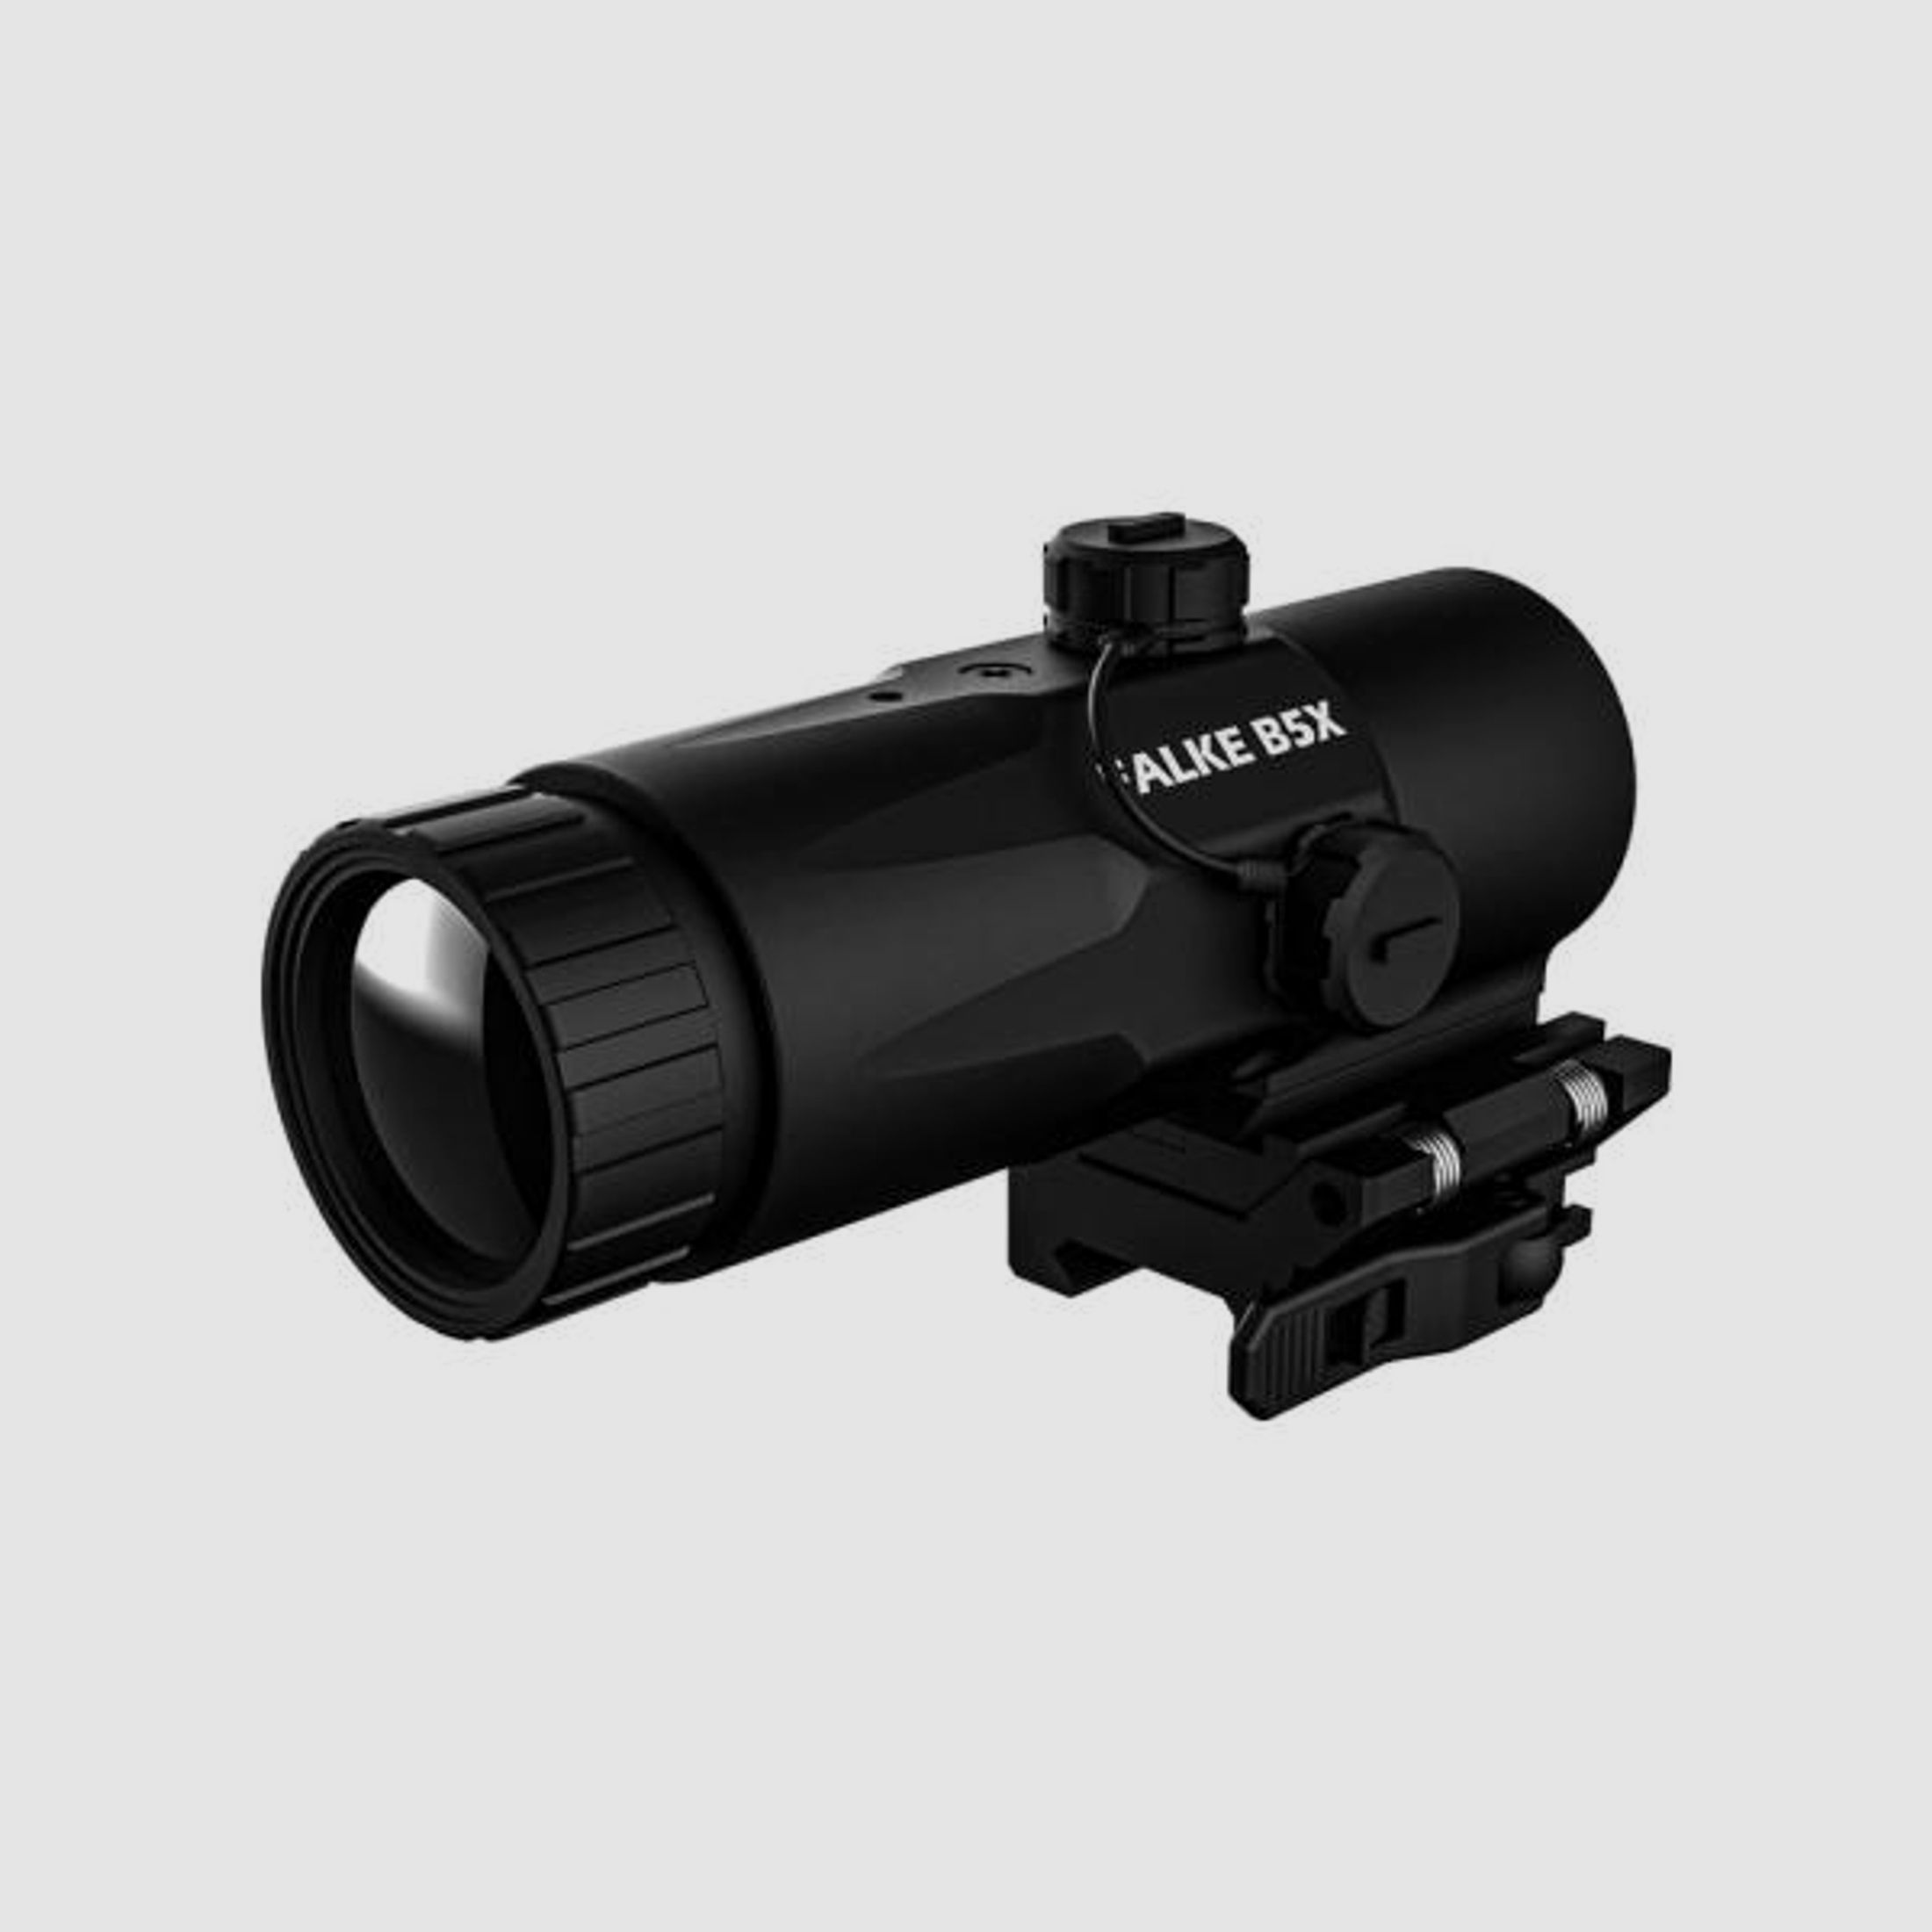 FALKE Optik Leuchtpunktvisier B5xLE Magnifier 5-fach-Booster m. Picatinny-Montage